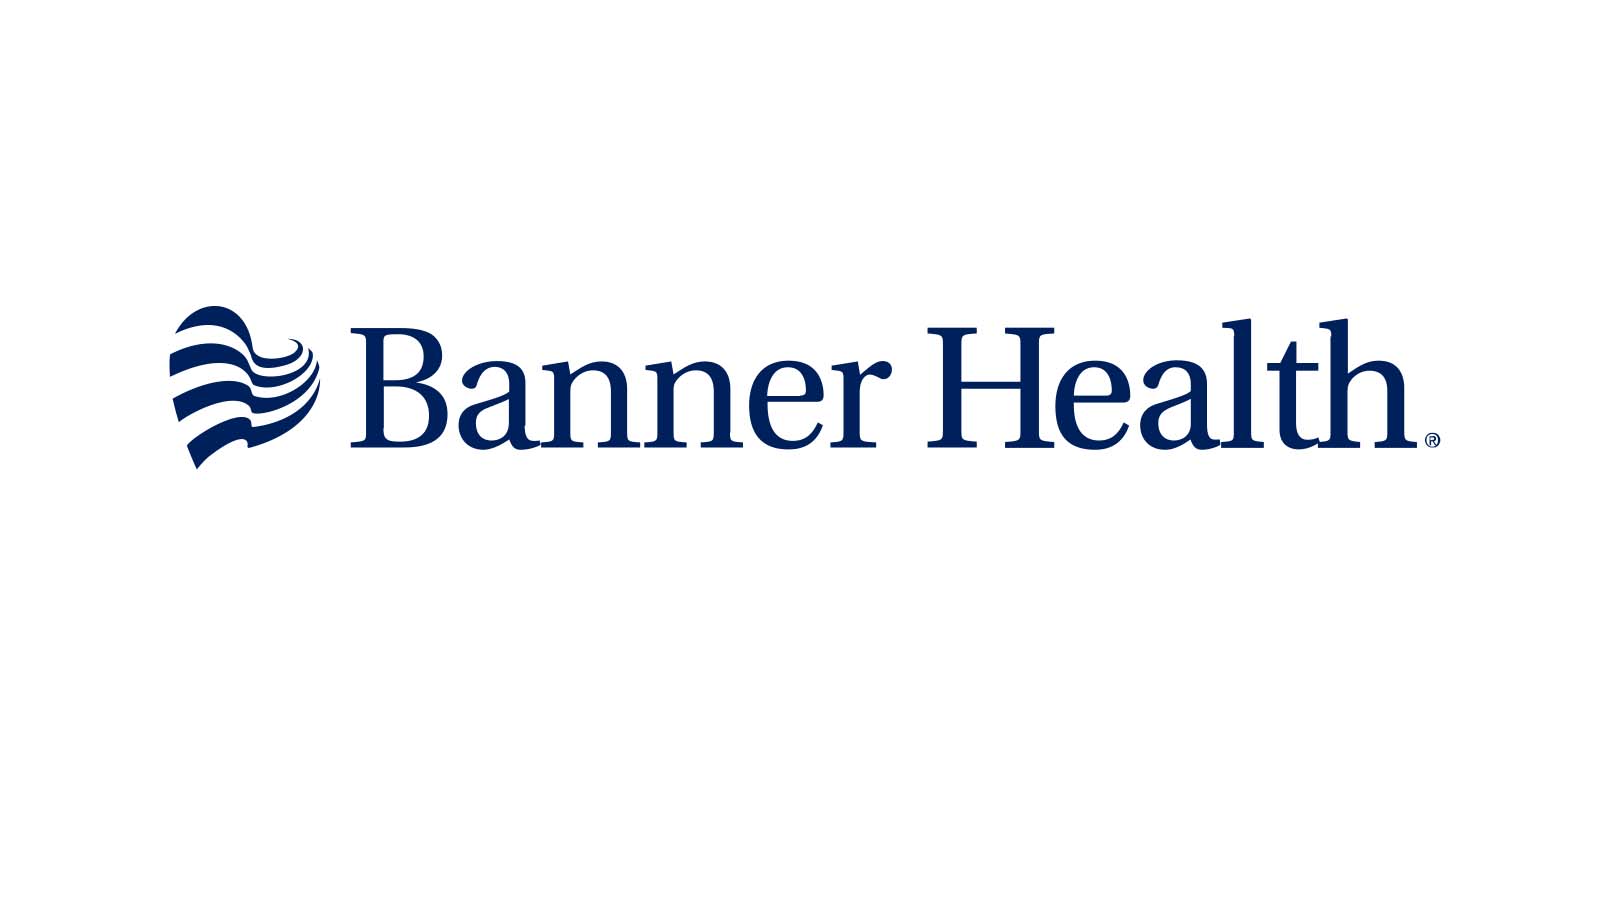 banner health logo